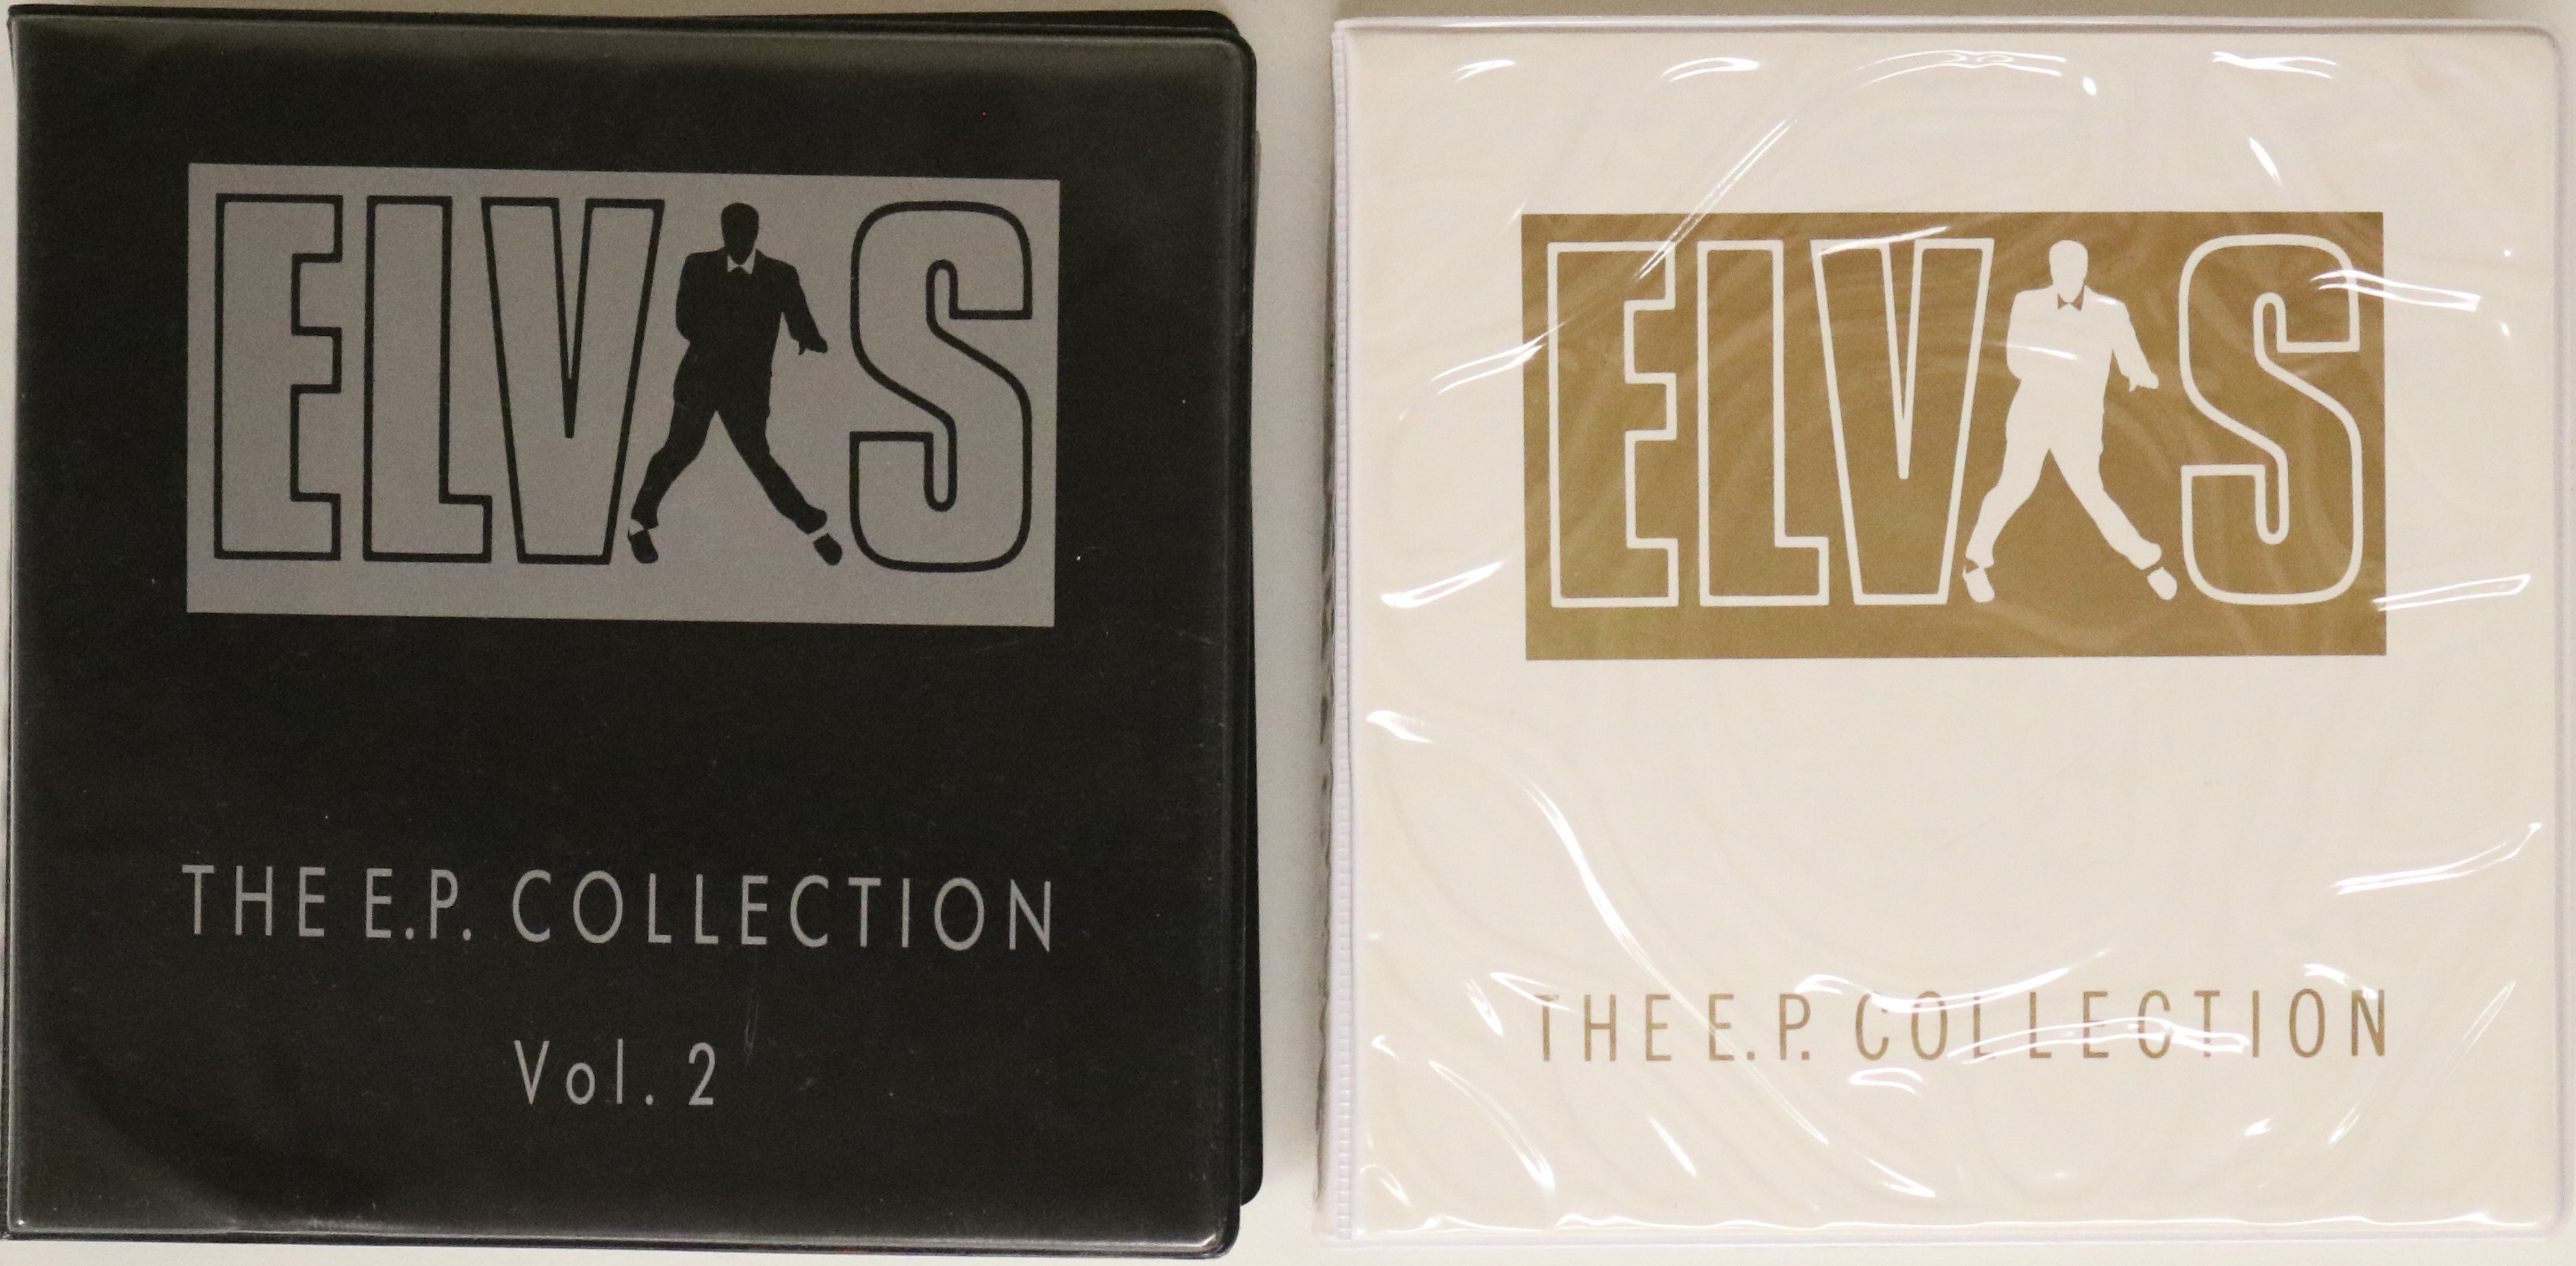 ELVIS PRESLEY - THE E.P. COLLECTION ALBUMS - BOX SETS.